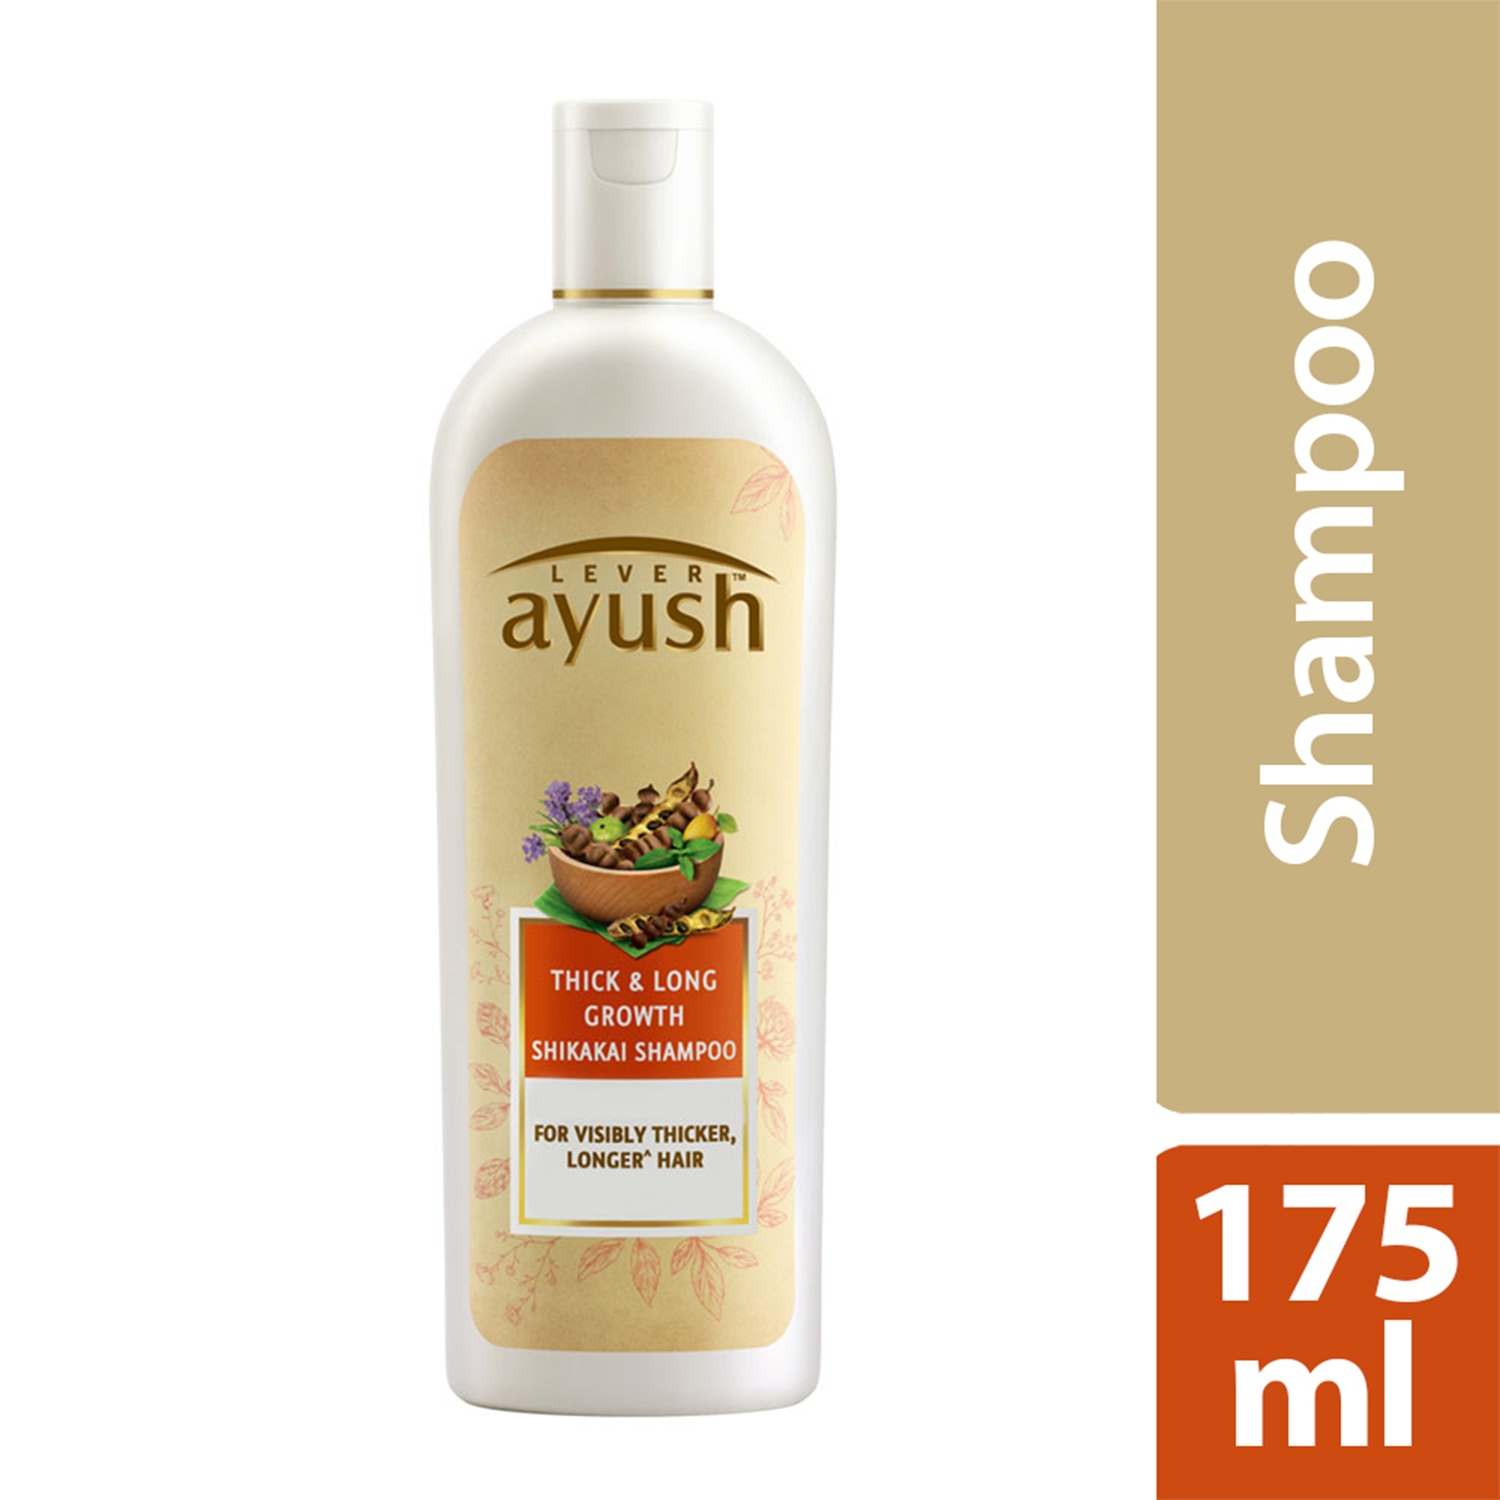 Lever Ayush Shampoo Long & Strong Growth Shikakai -0